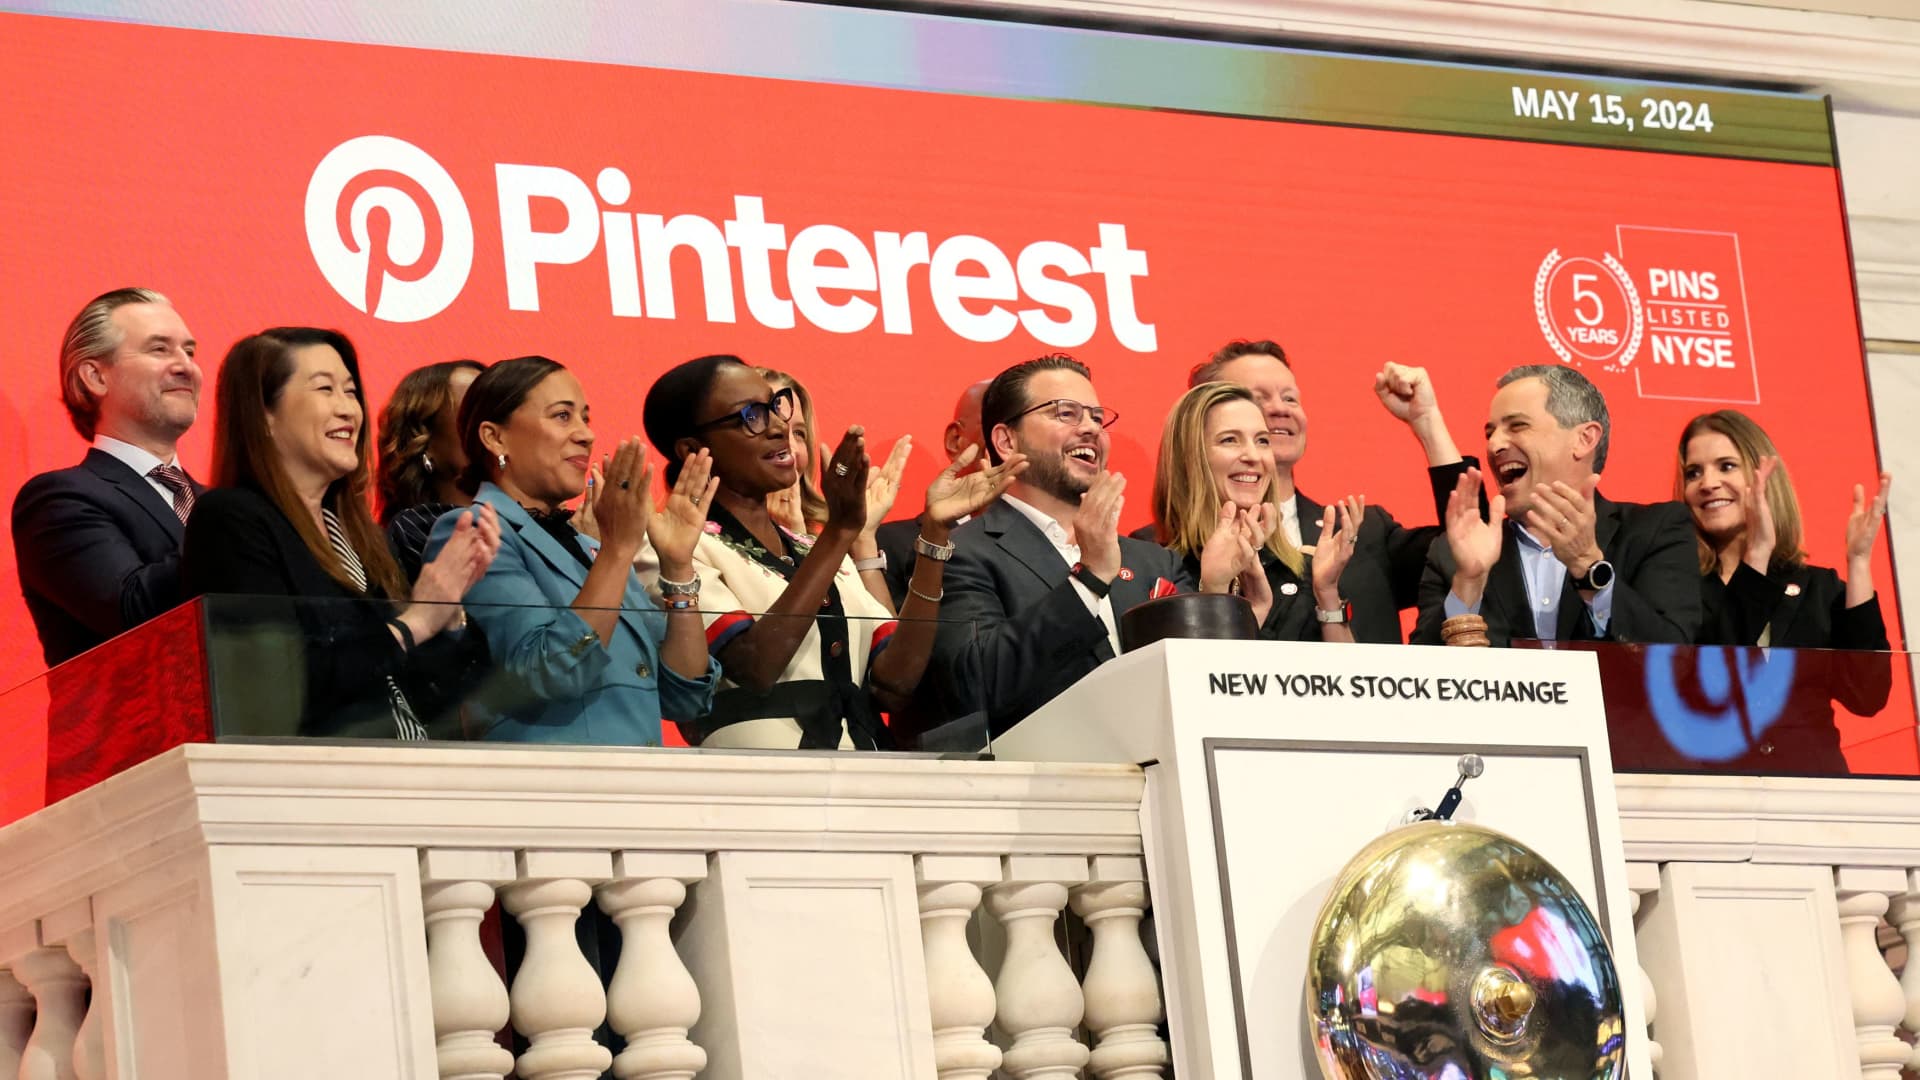 CEO says Pinterest’s strategy revolves around ‘positivity’ [Video]